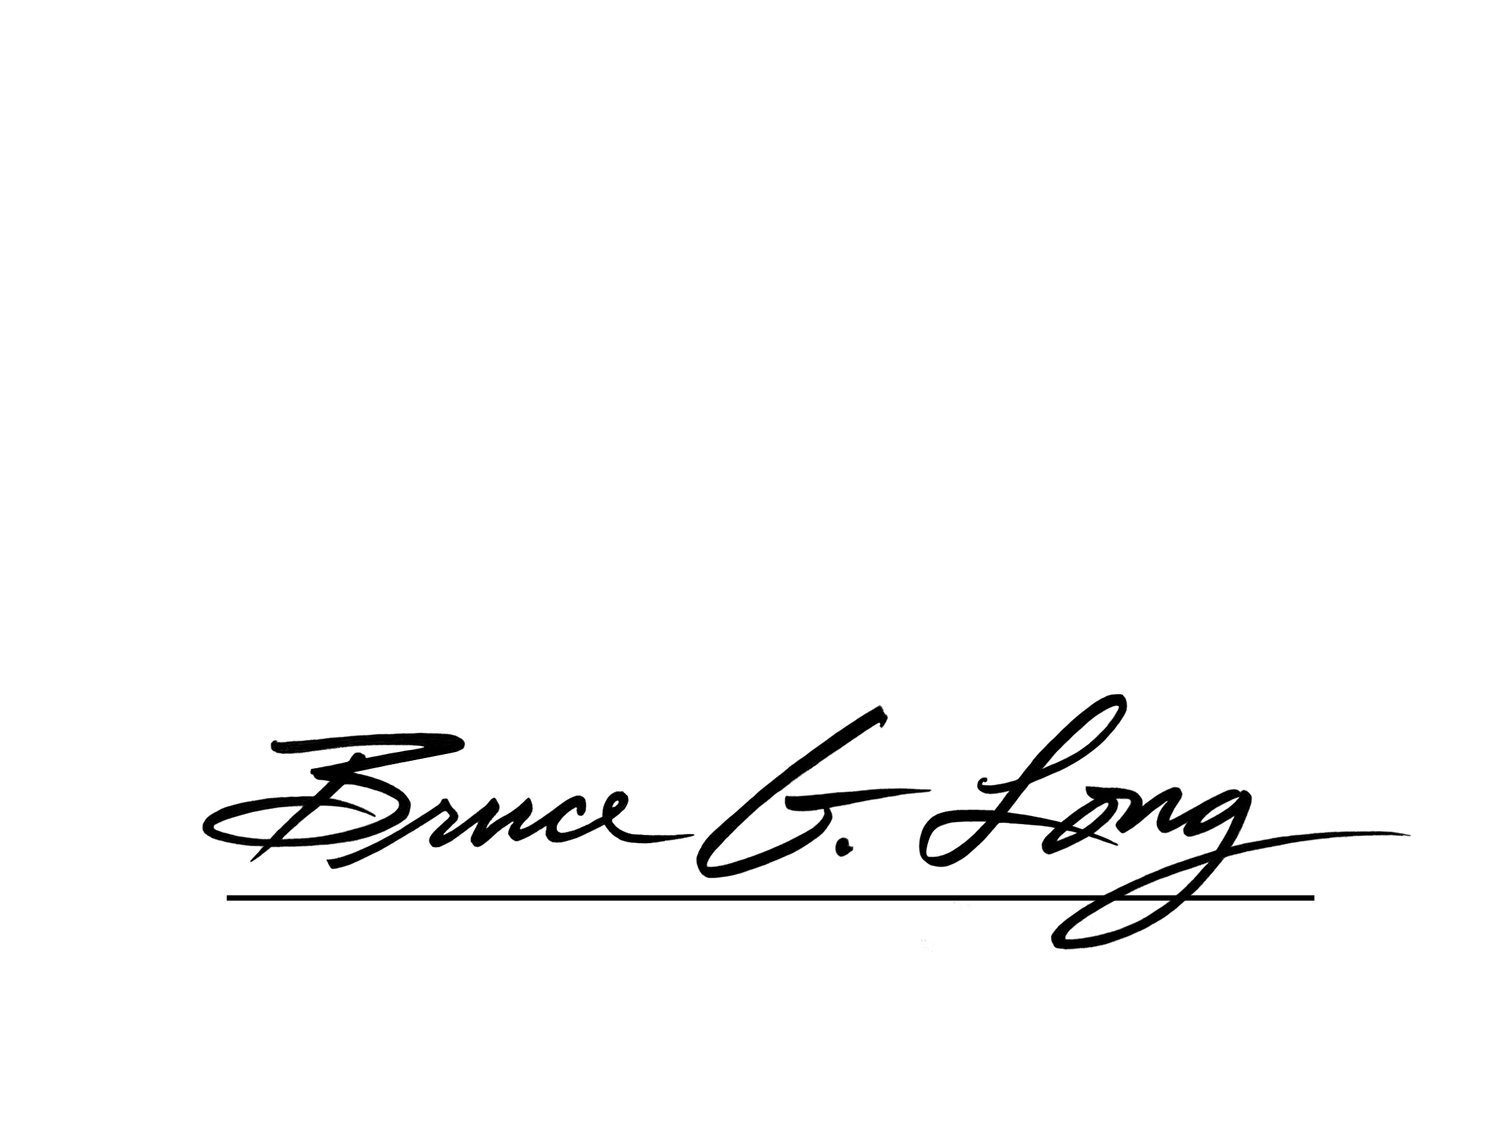 Bruce Long Design